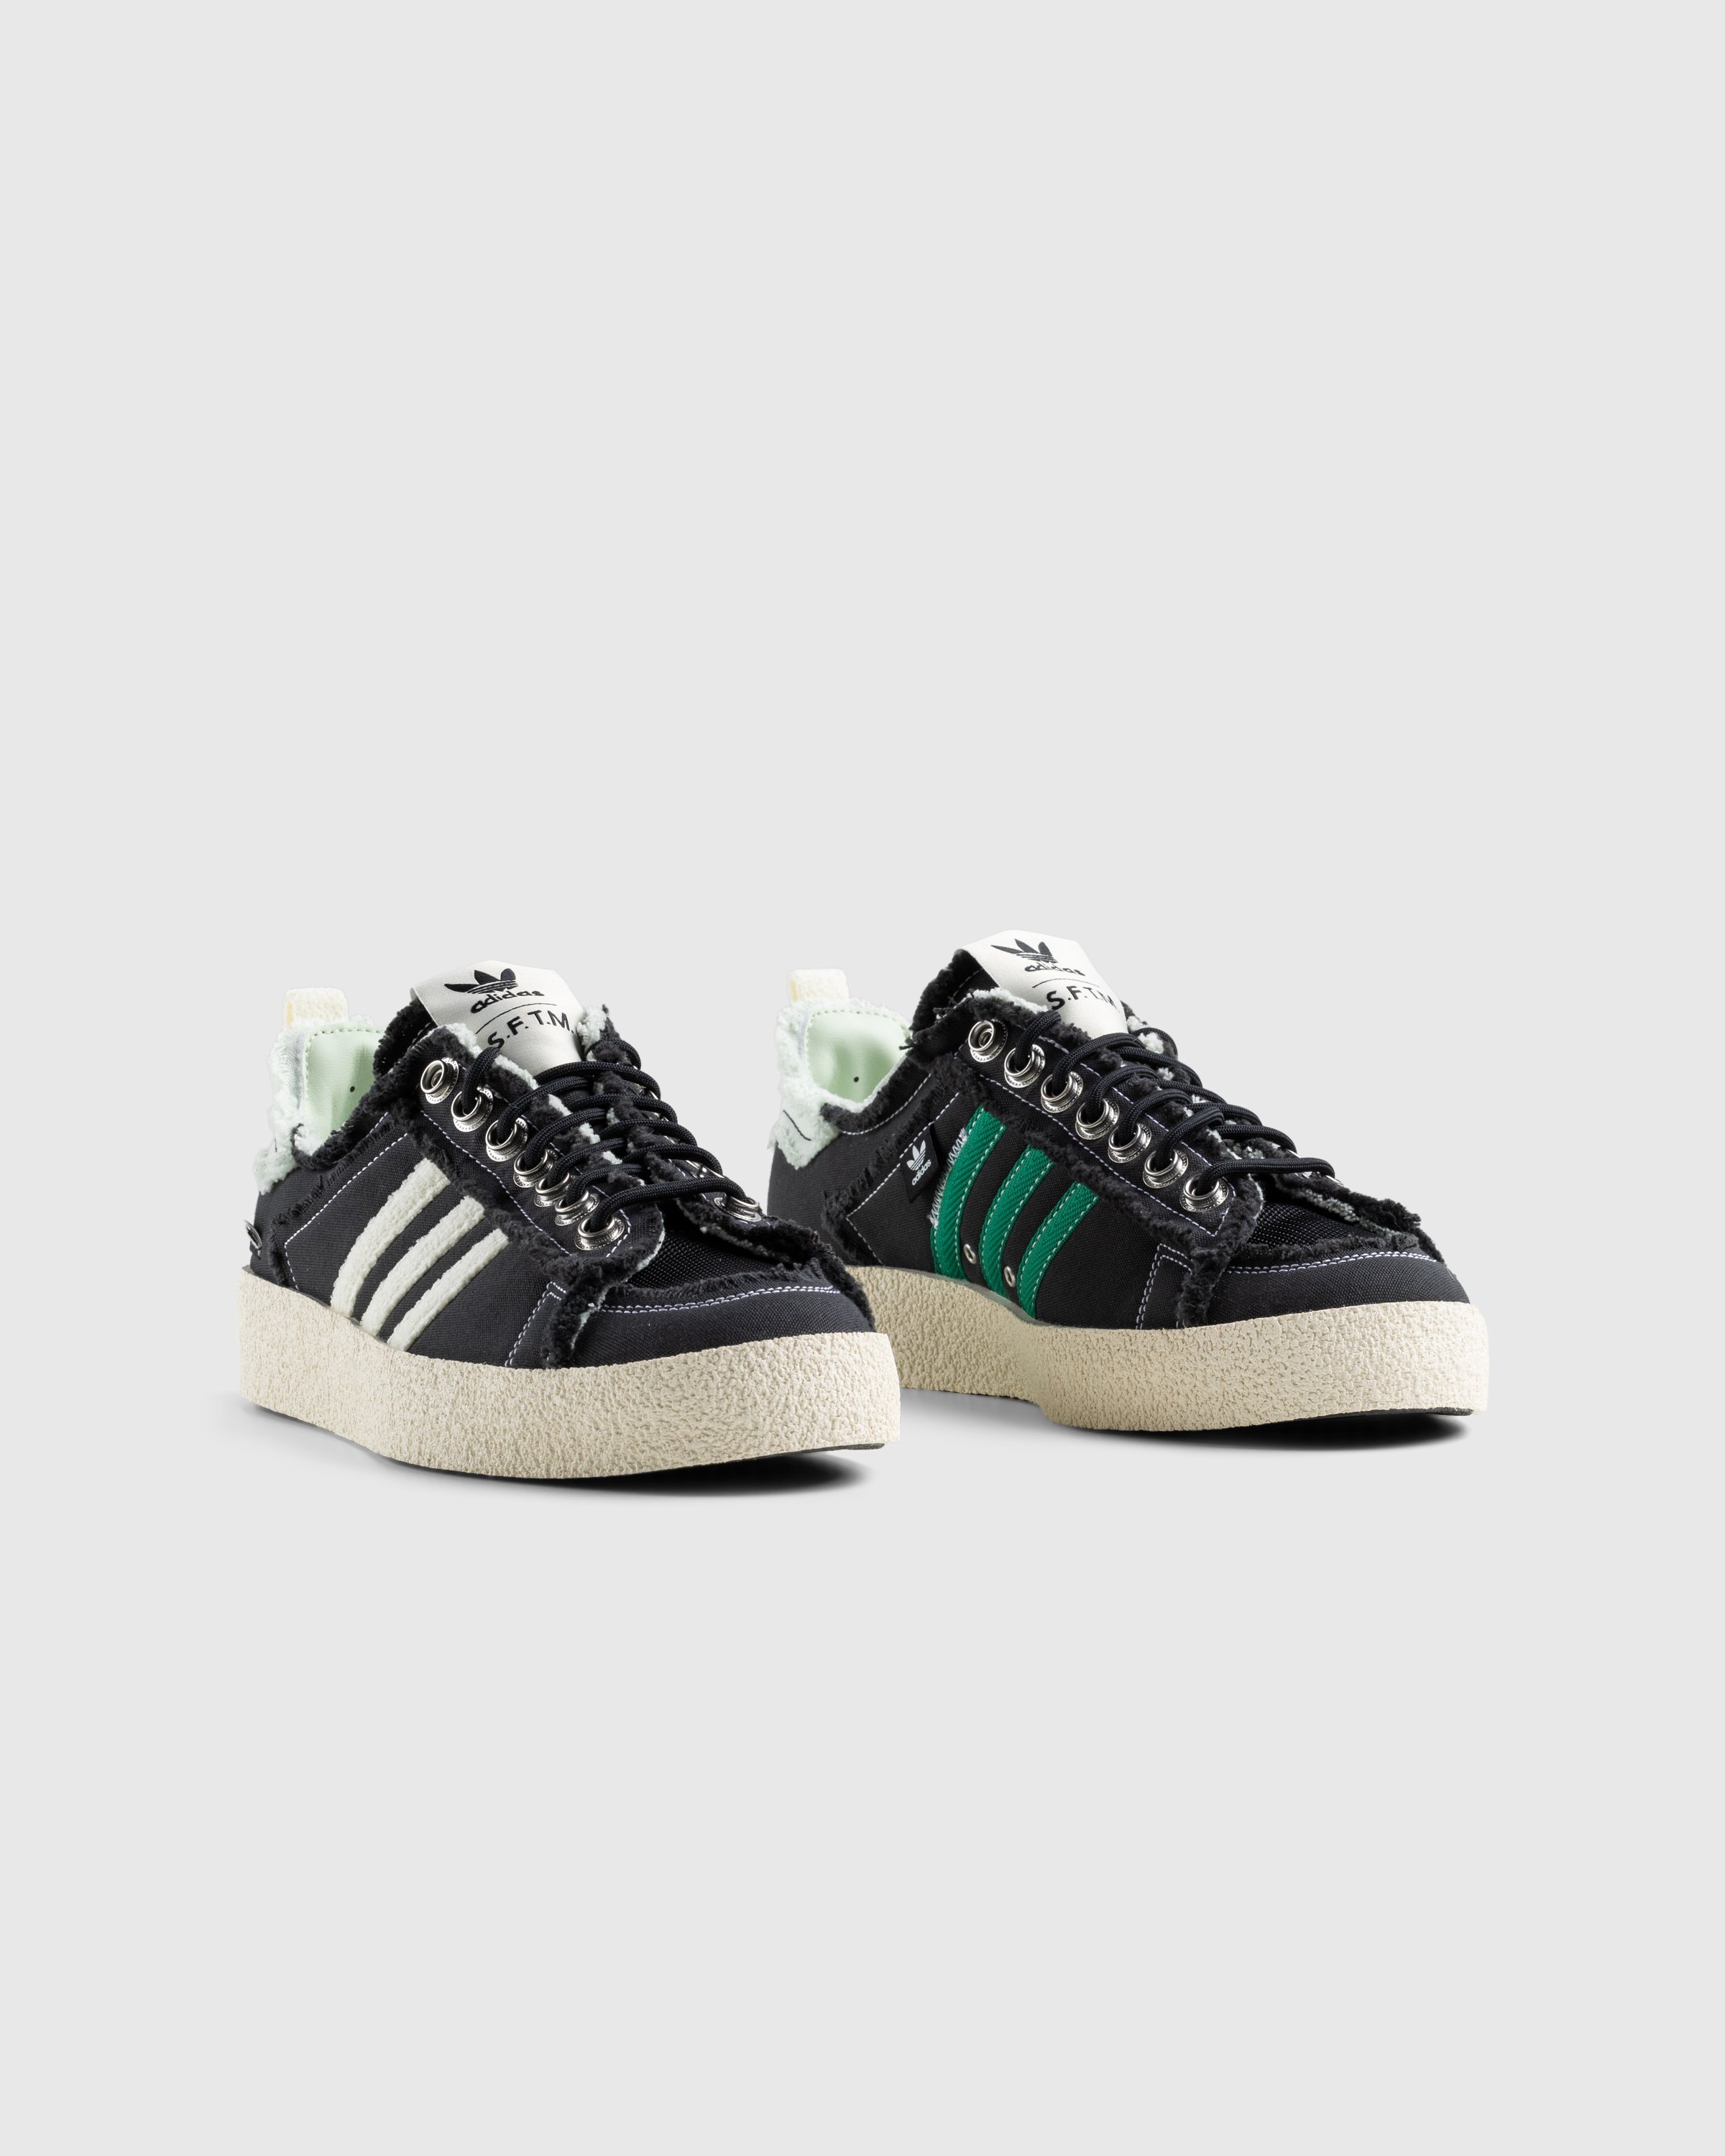 Adidas - CAMPUS 80s CBLACK/CWHITE/LINGRN - Footwear - Black - Image 3